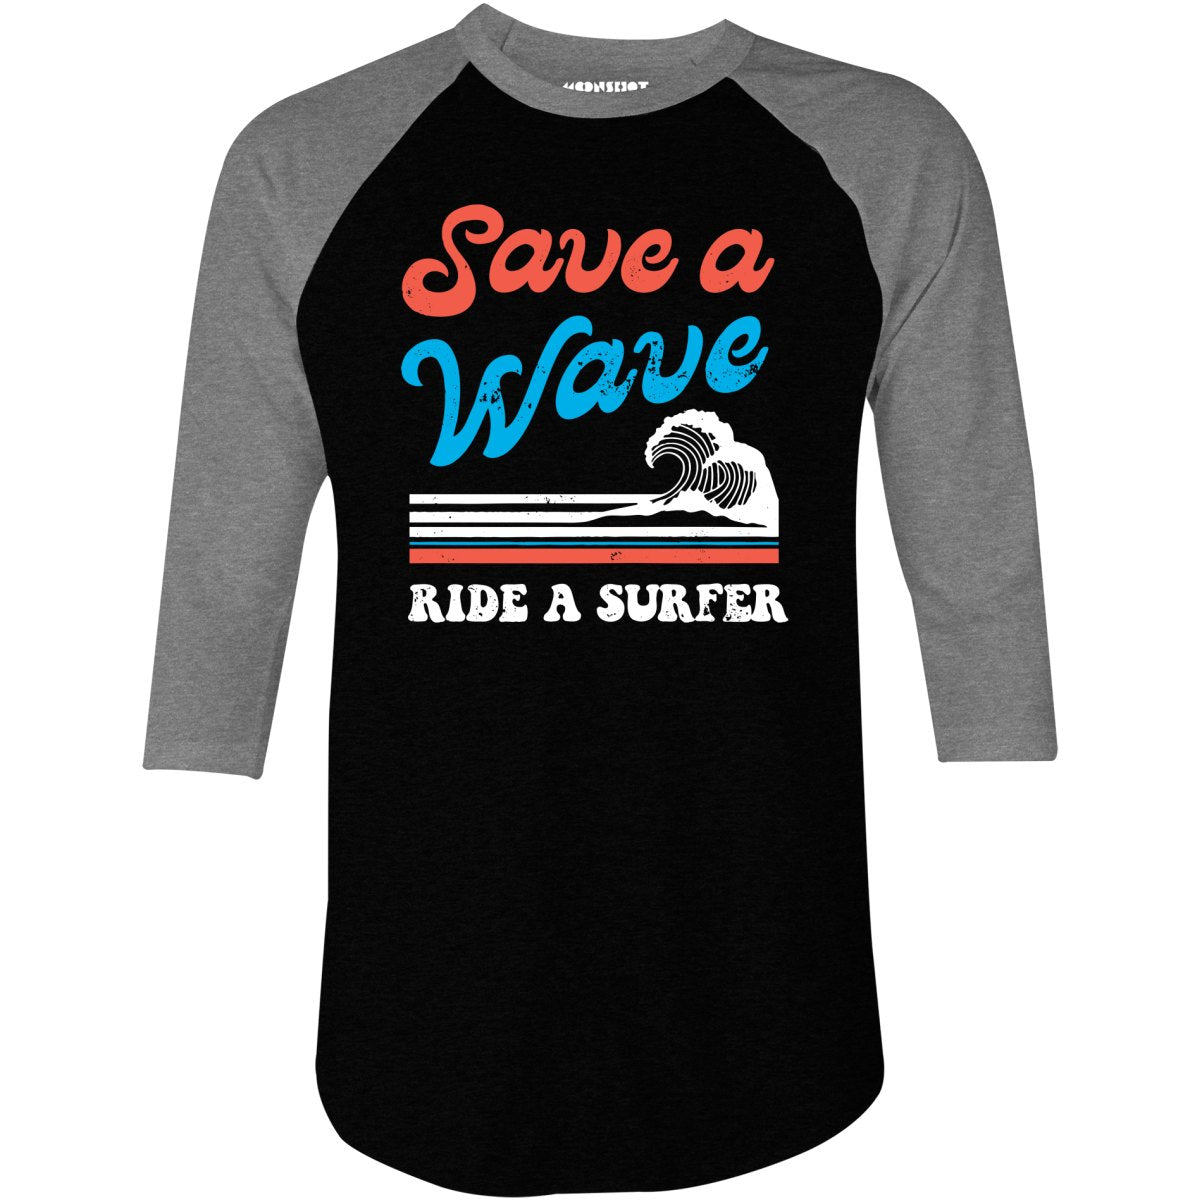 Save a Wave Ride a Surfer - 3/4 Sleeve Raglan T-Shirt